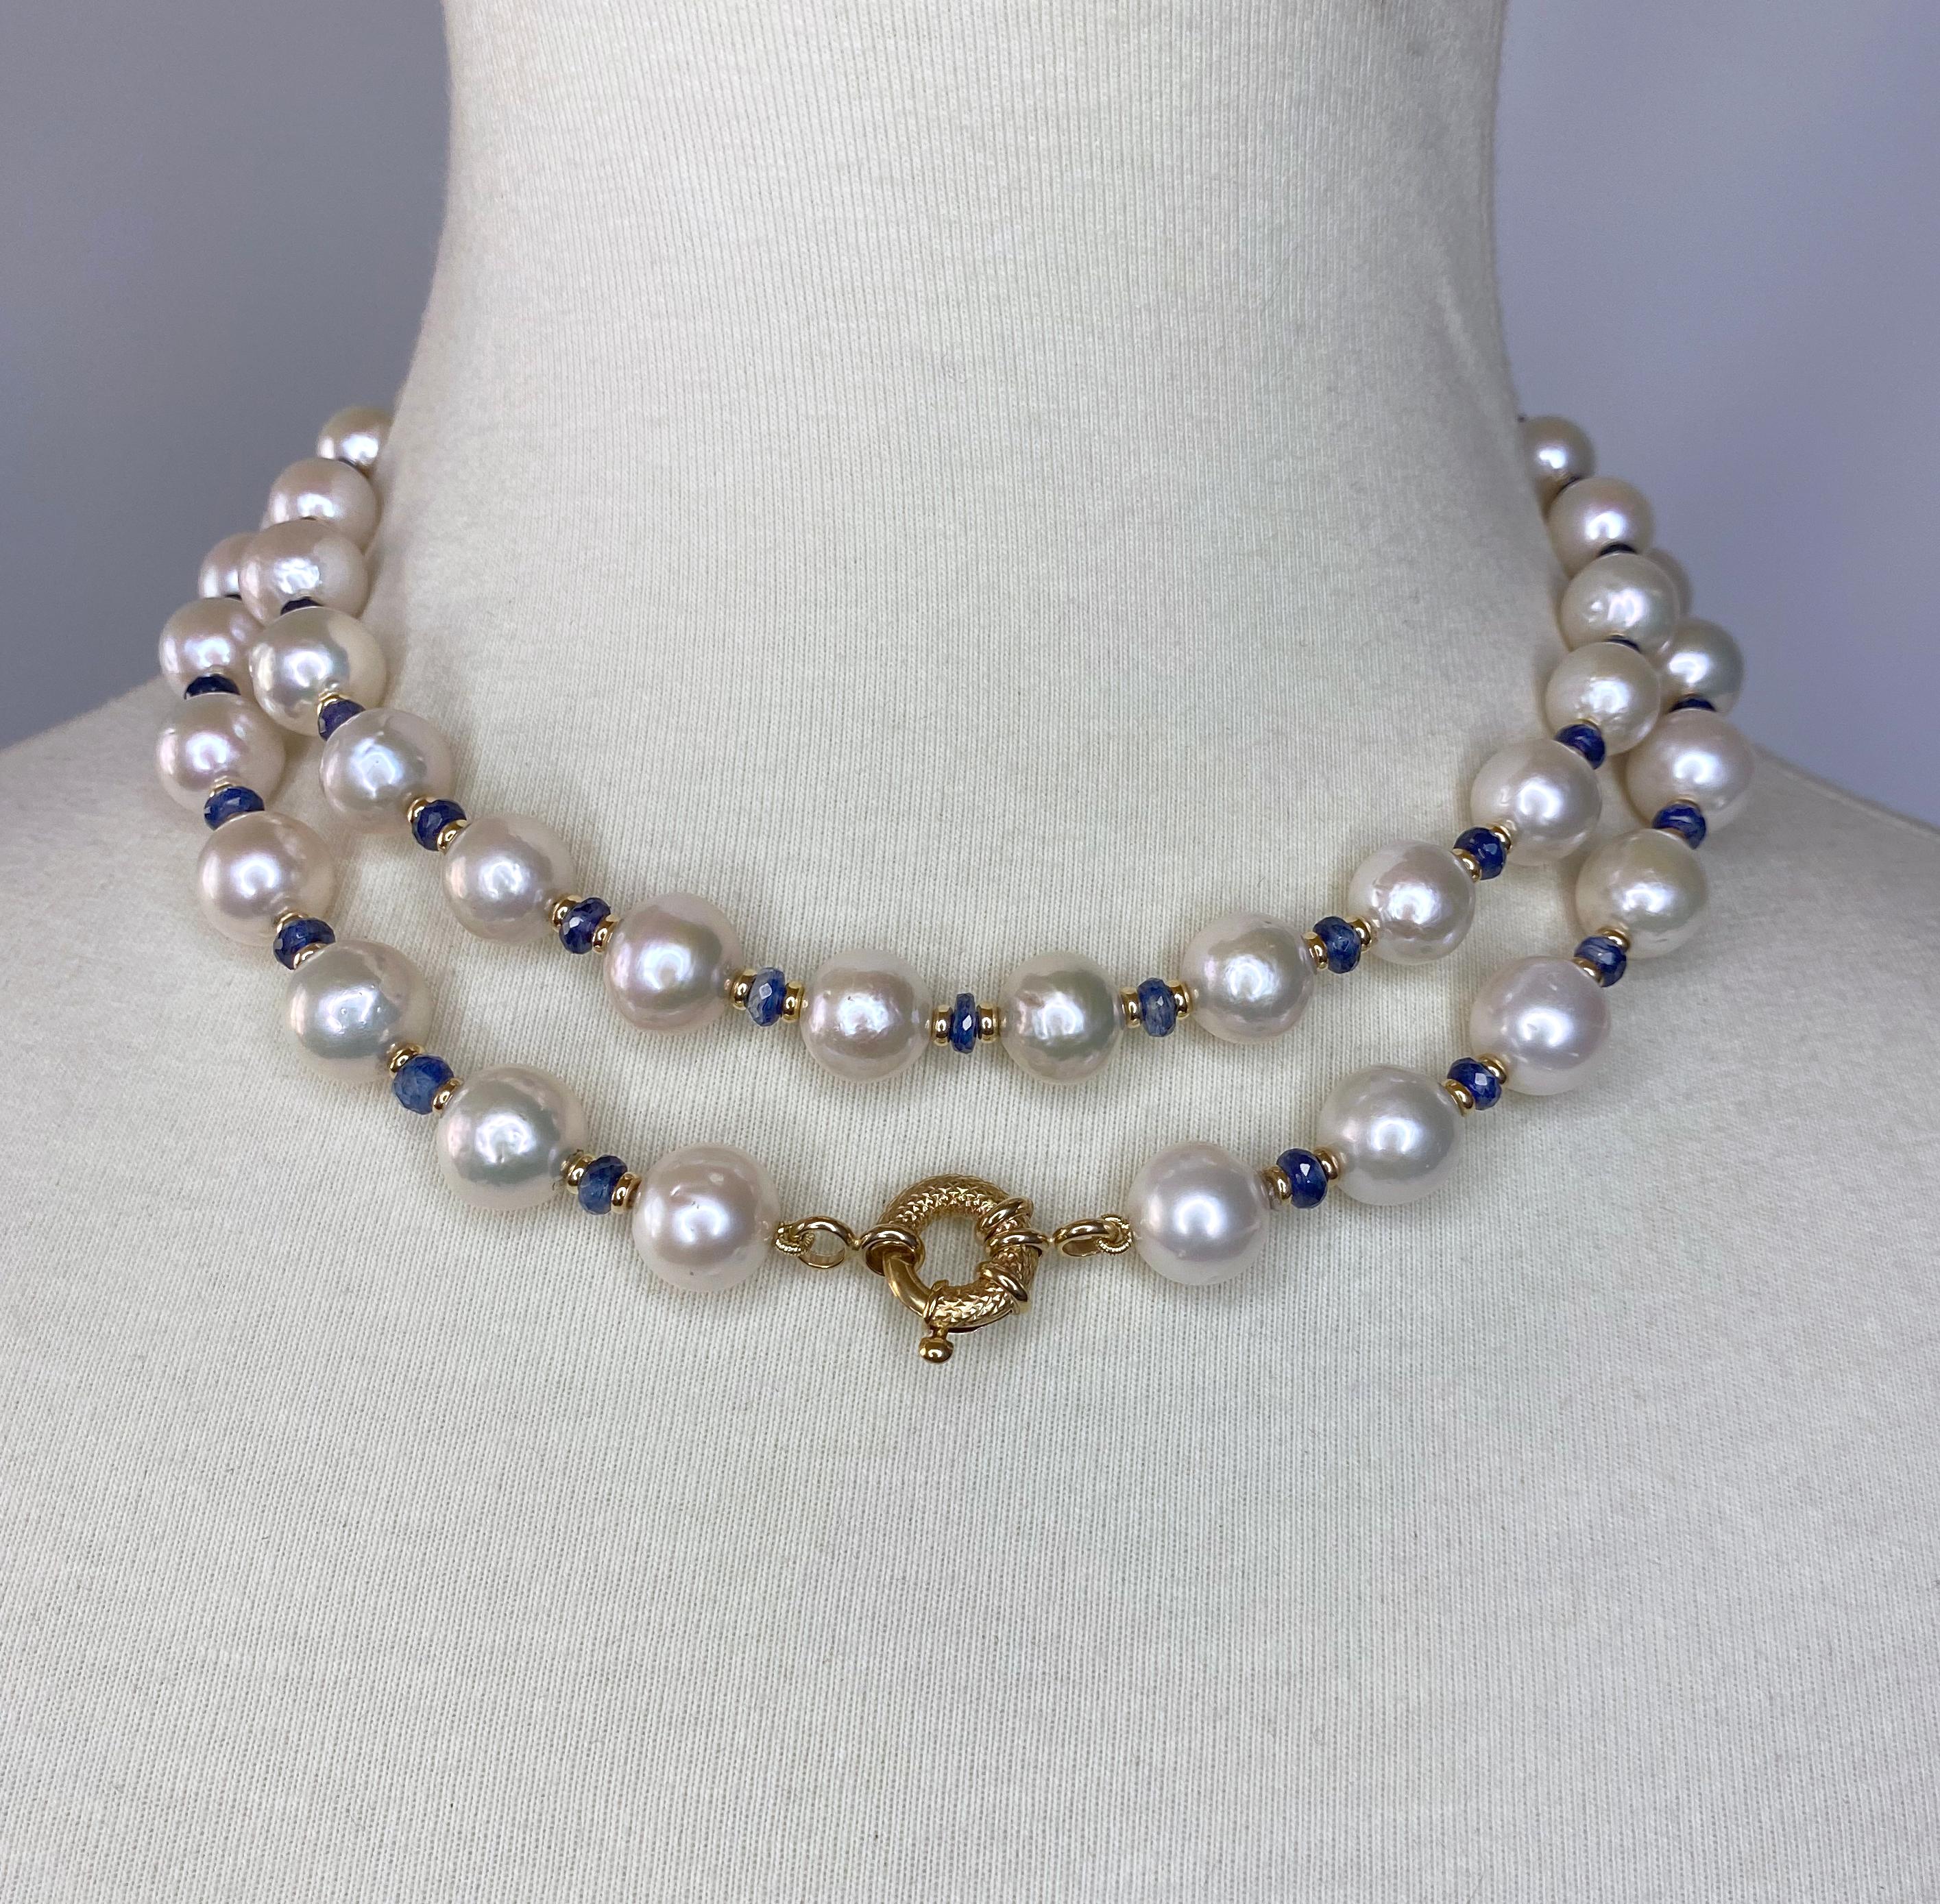 Artisan Marina J - Sautoir en or jaune 14 carats avec perles et saphirs bleus facettés